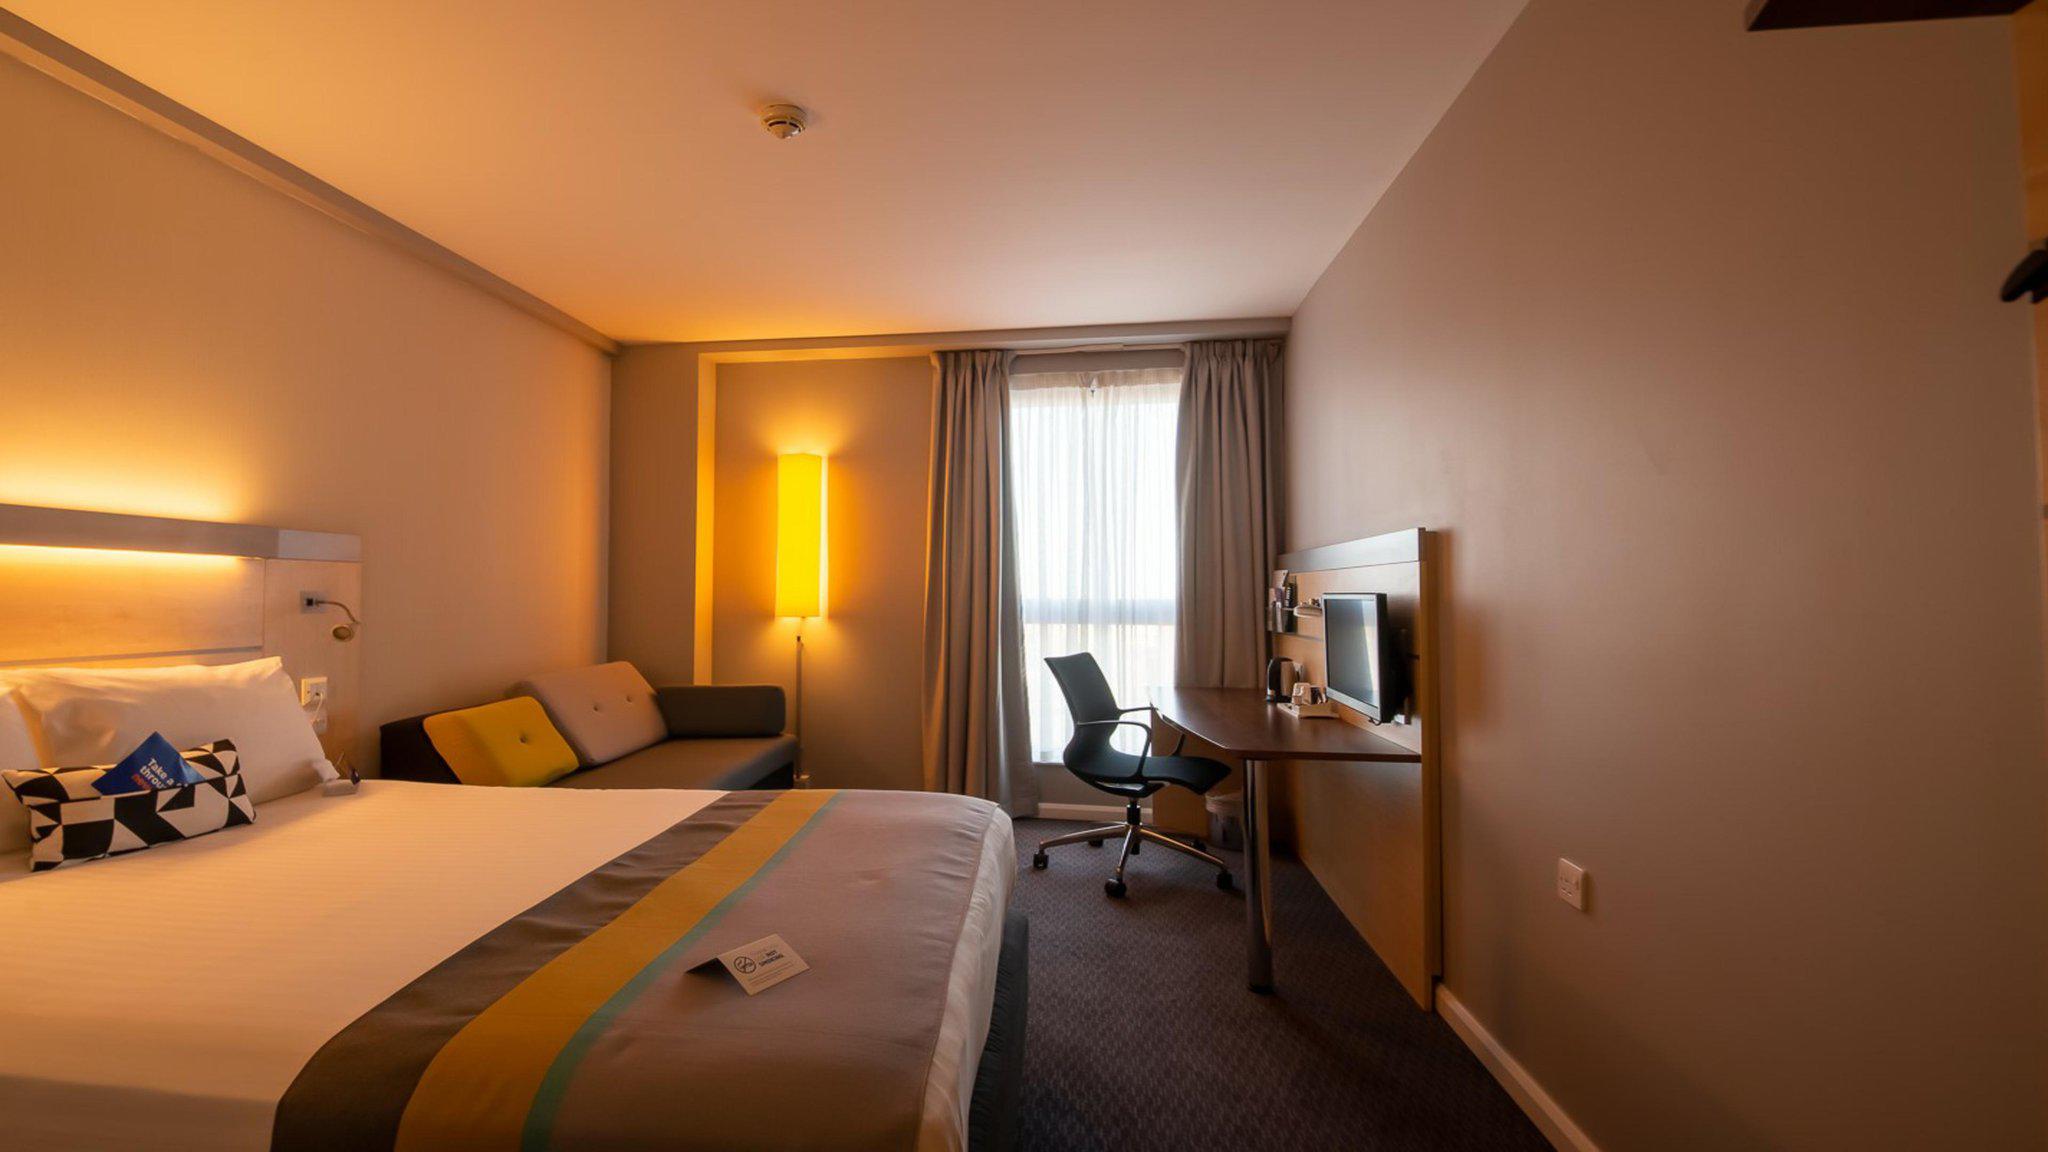 Holiday Inn Express Hull City Centre, an IHG Hotel Kingston Upon Hull 01482 485700